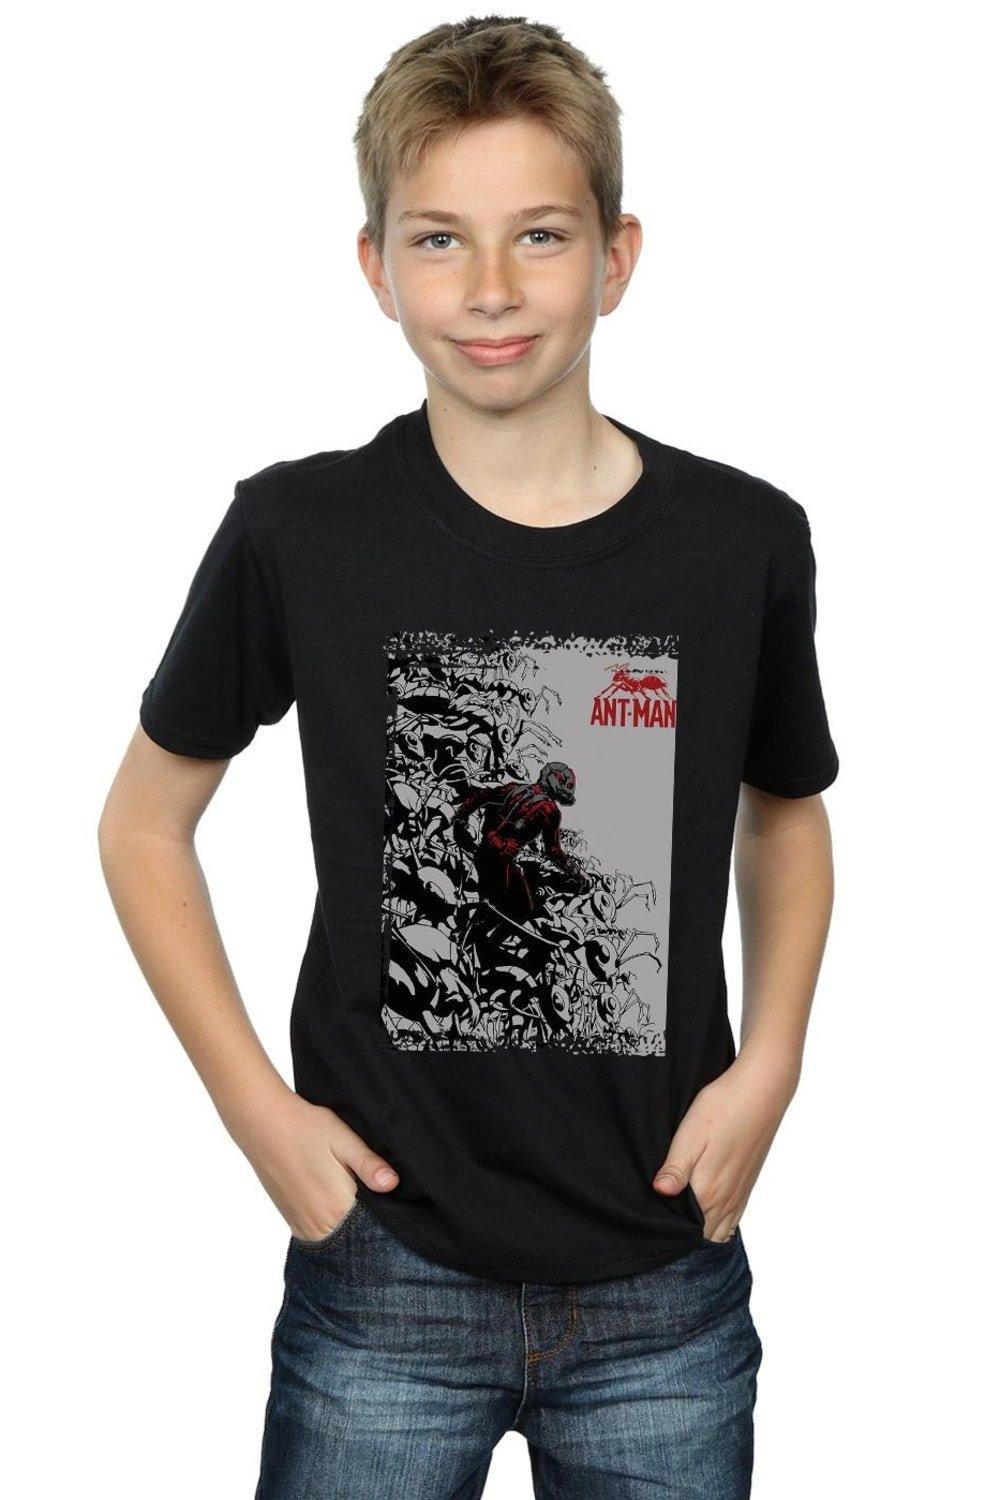 Ant-Man Army T-Shirt